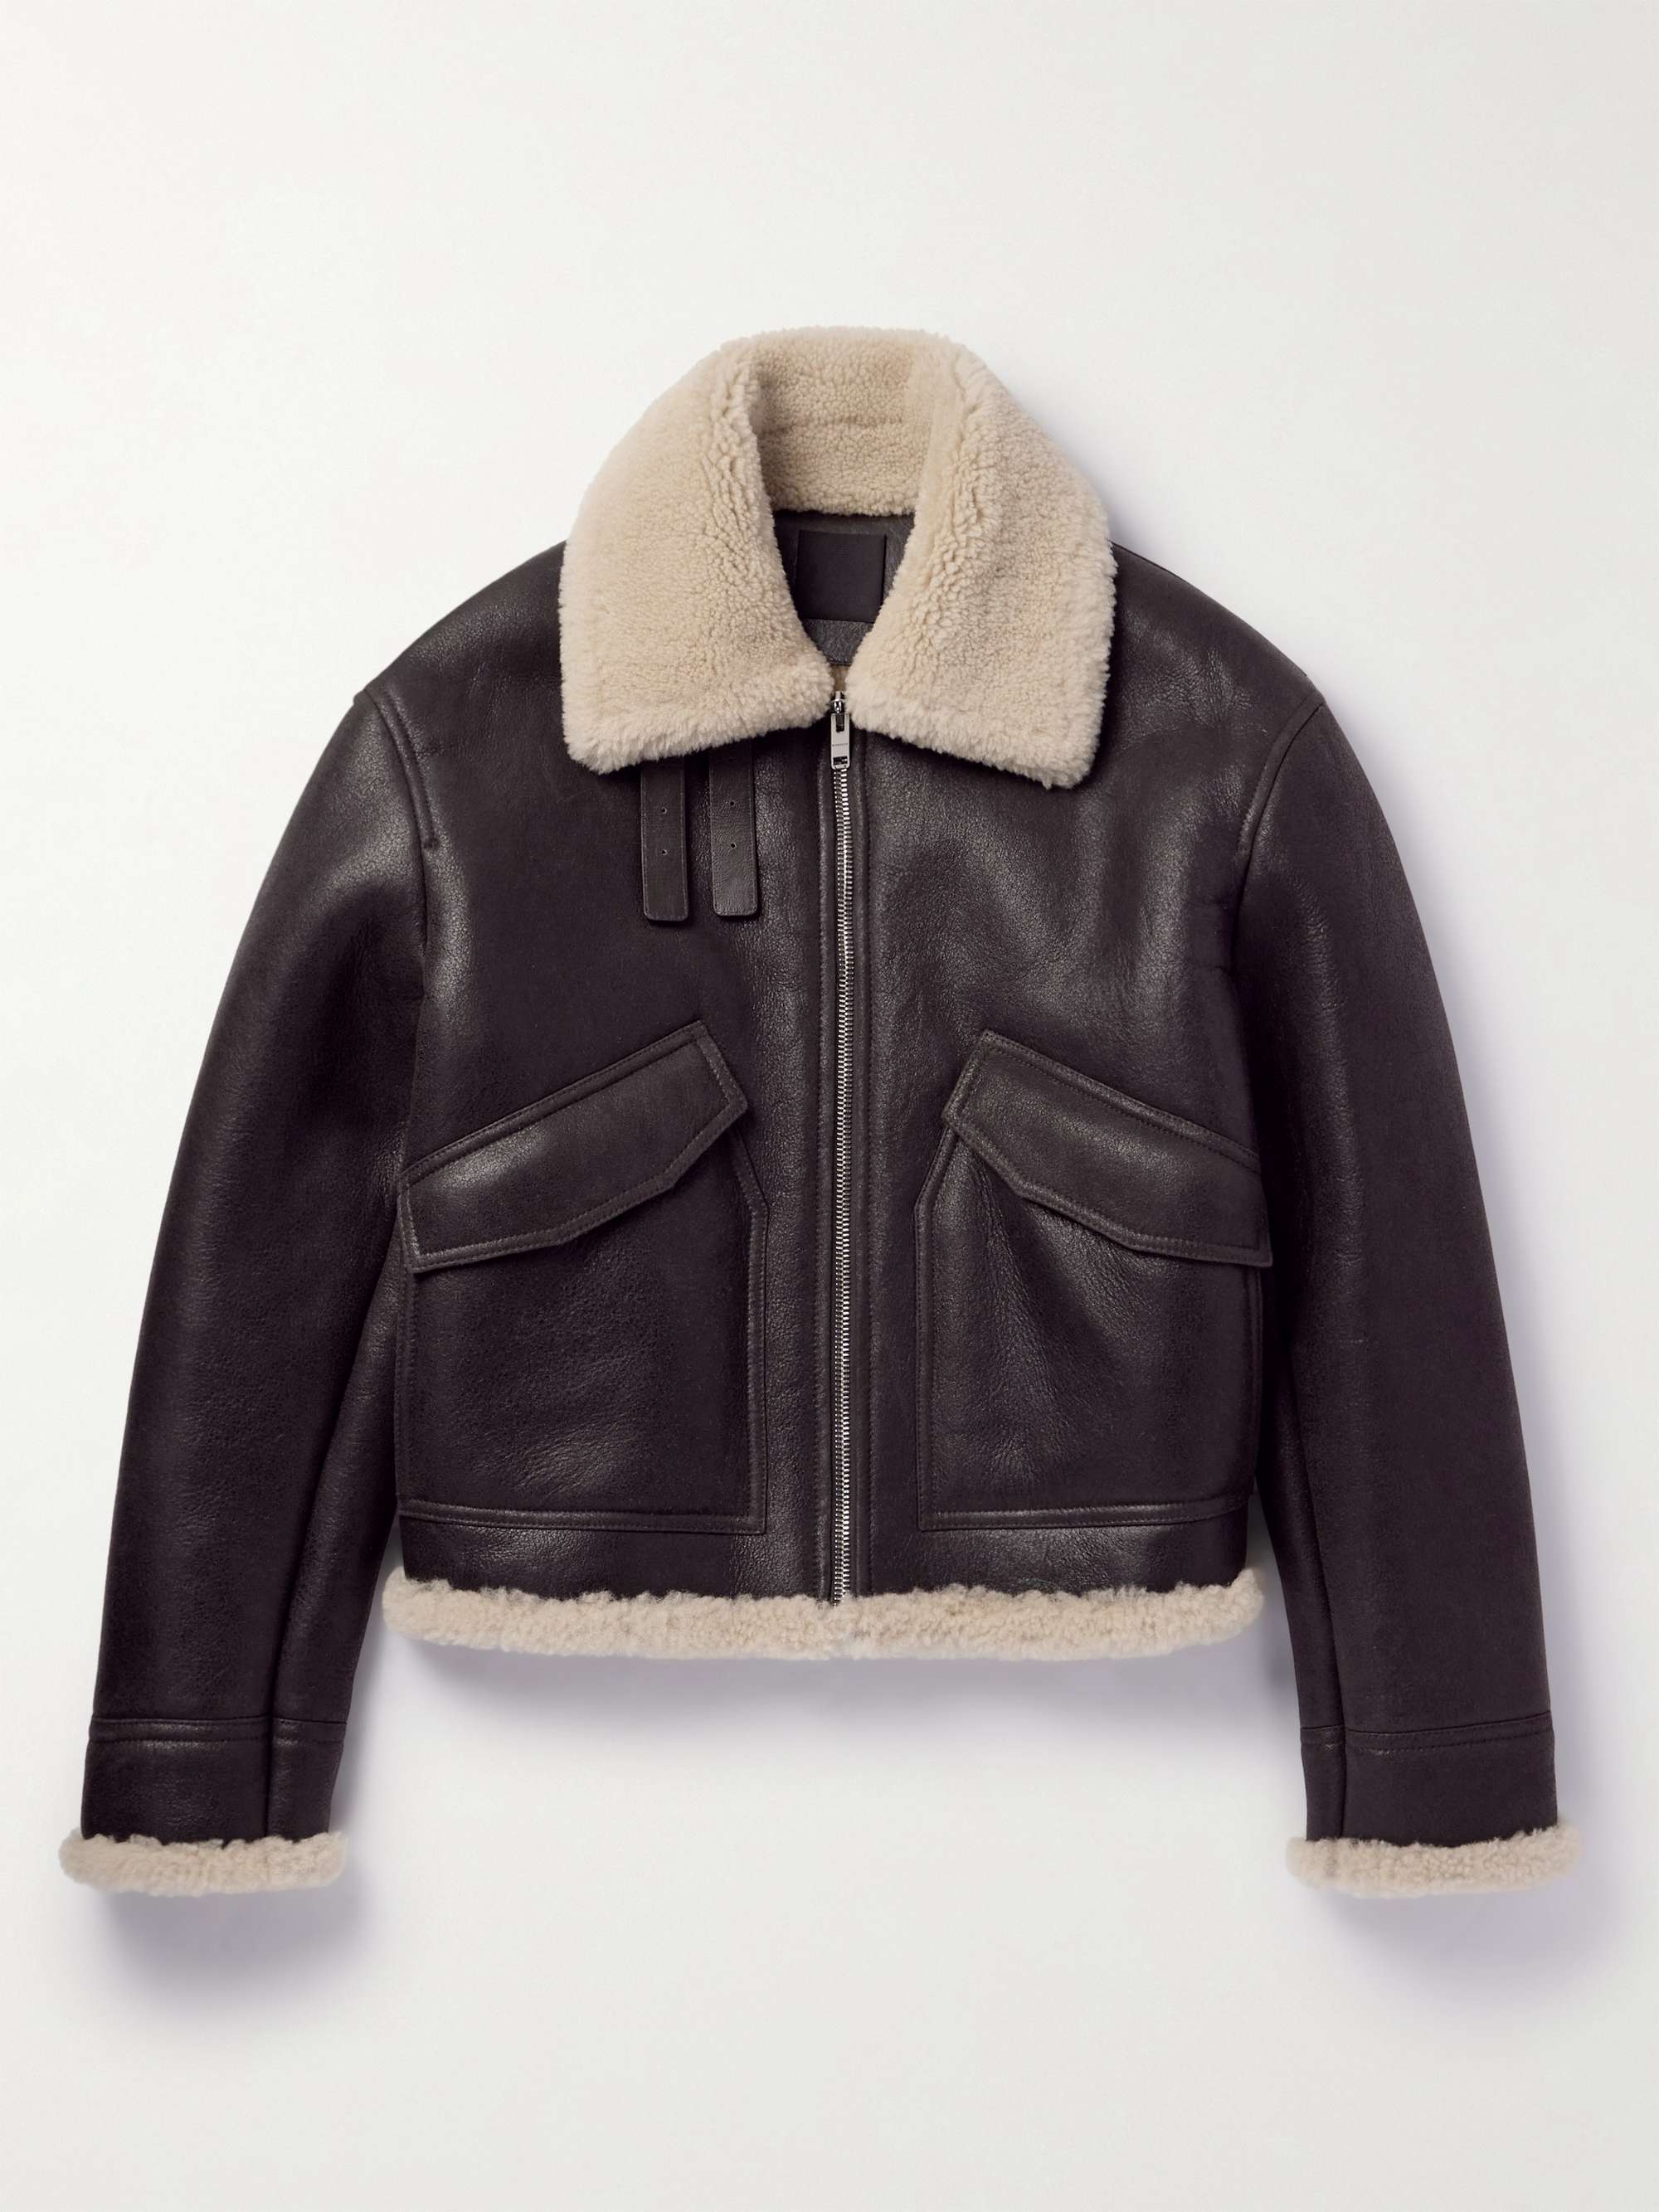 GIVENCHY Shearling-Lined Leather Jacket for Men | MR PORTER